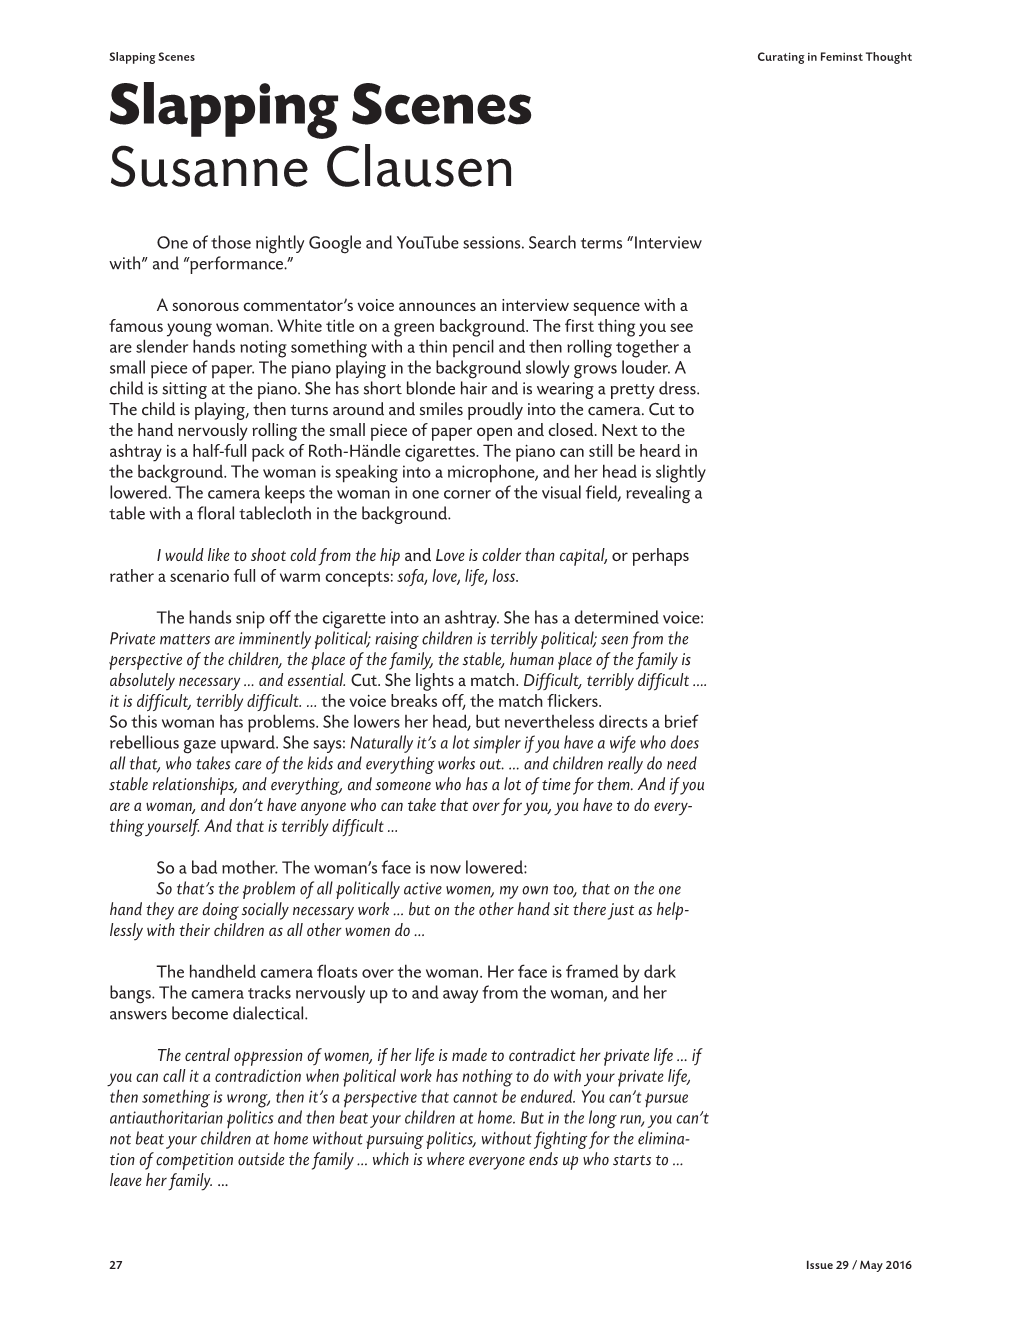 Slapping Scenes Susanne Clausen